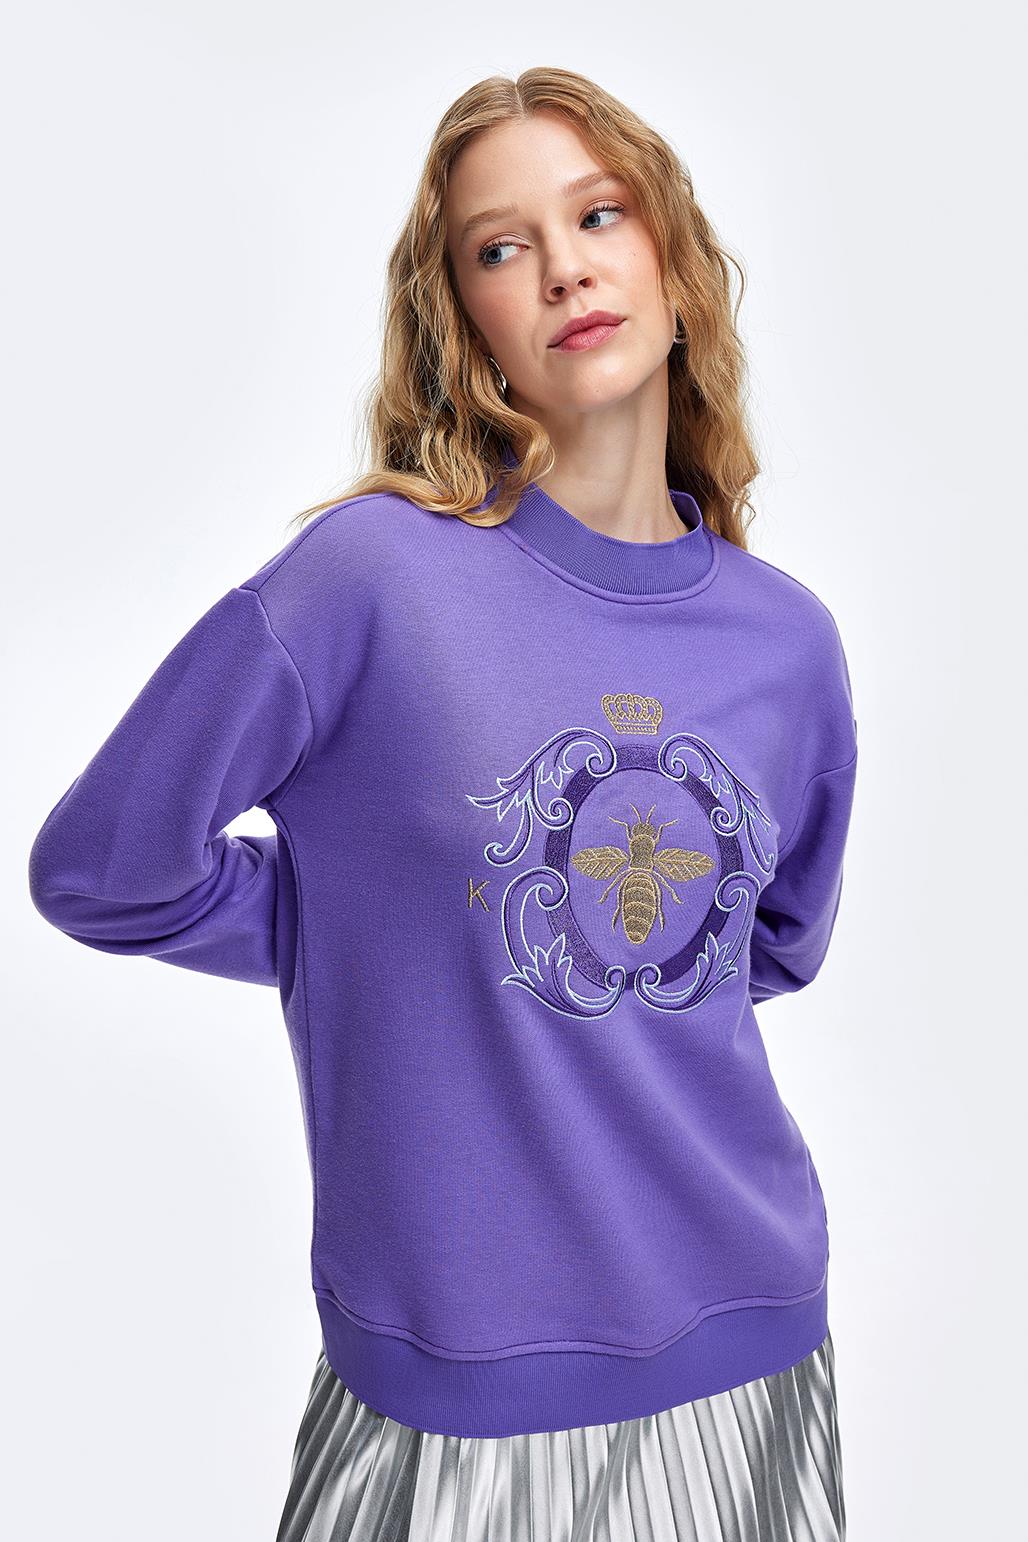 Gold Embroidered Hooded Sweatshirt Purple